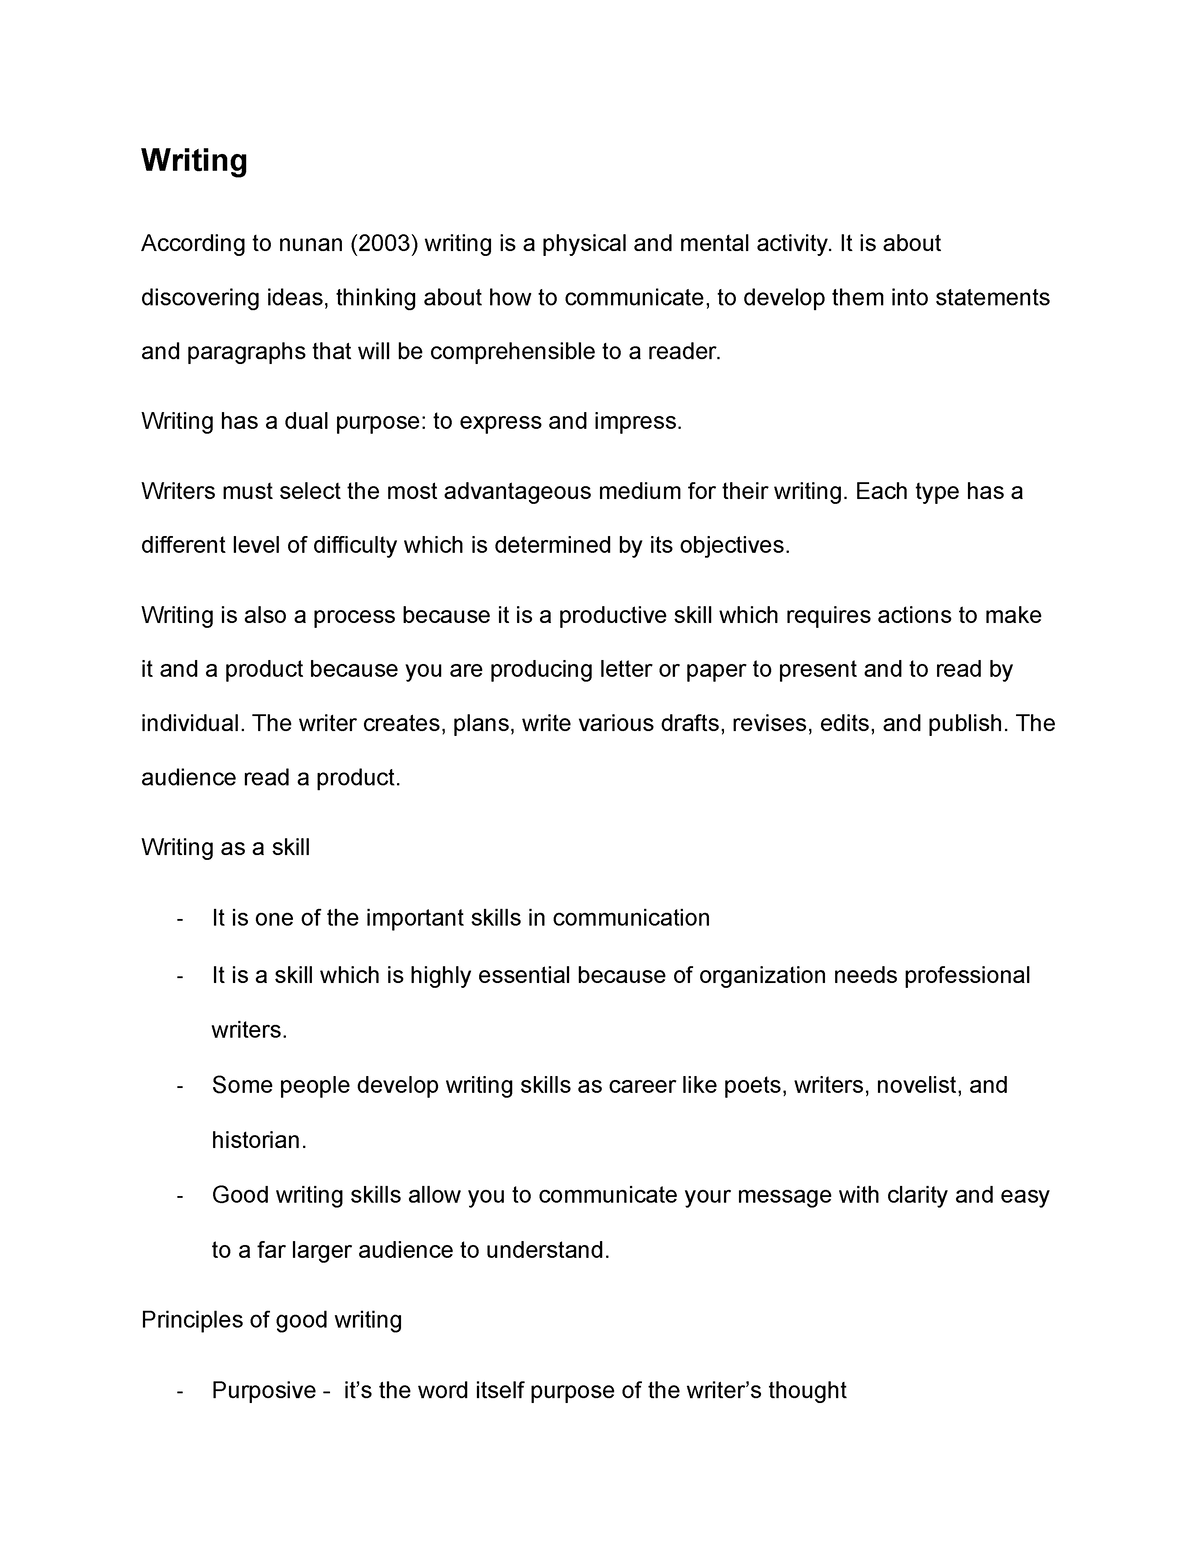 Types of writing - Writing According to nunan (2003) writing is a ...